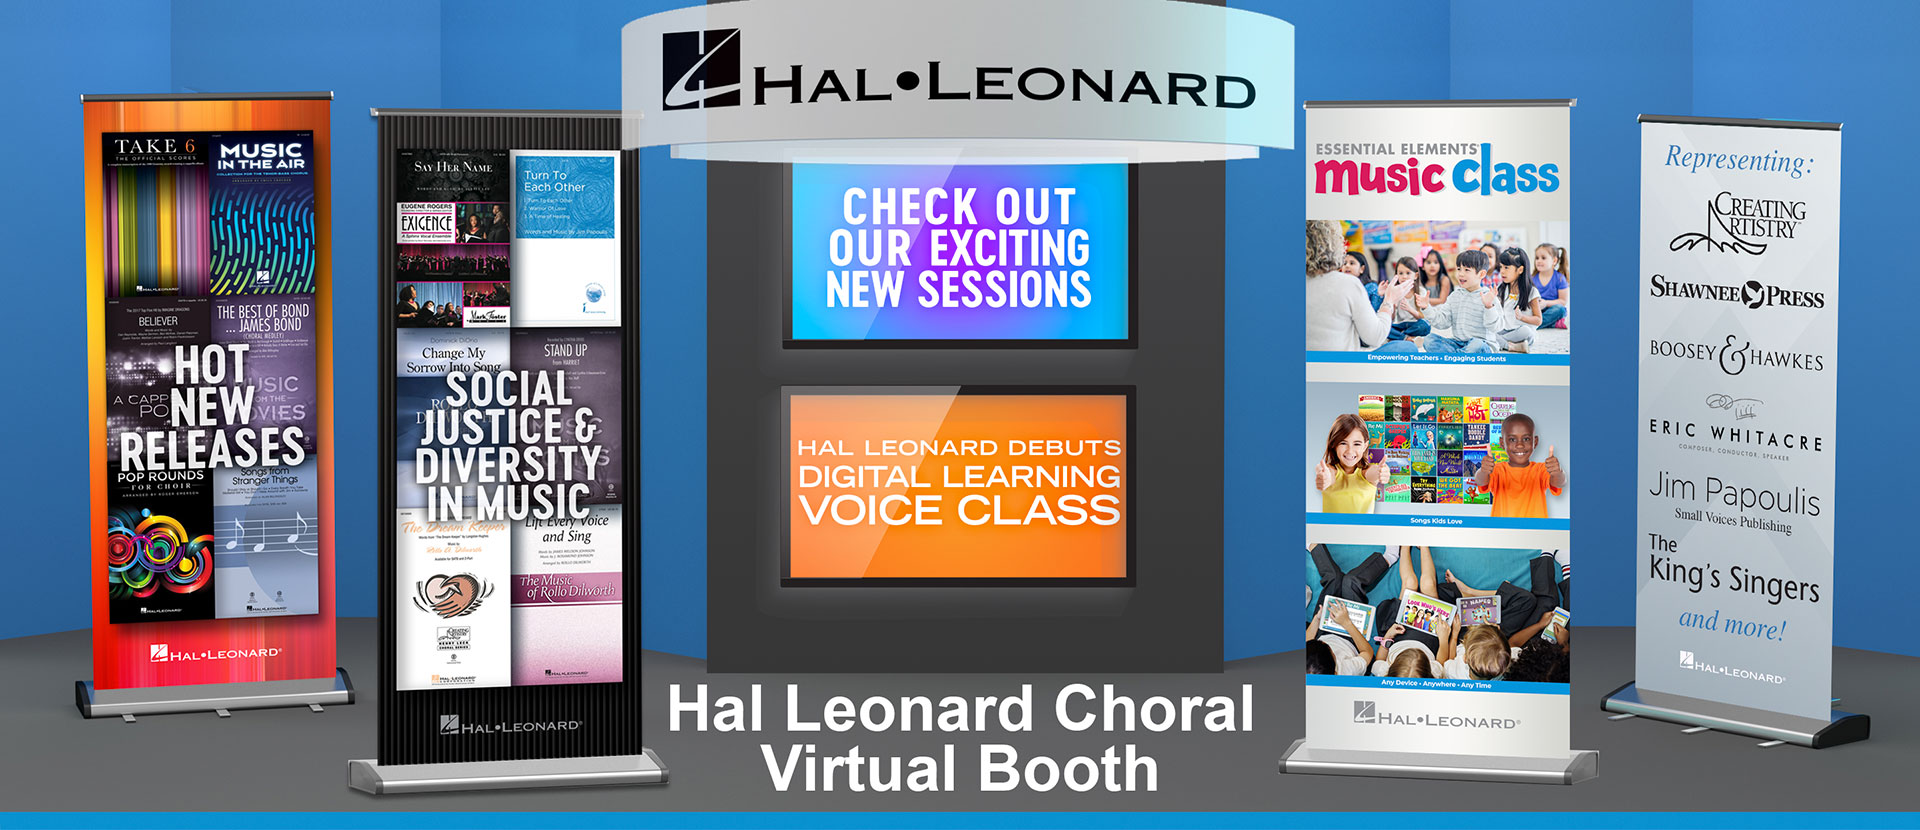 Hal Leonard Choral Virtual Booth